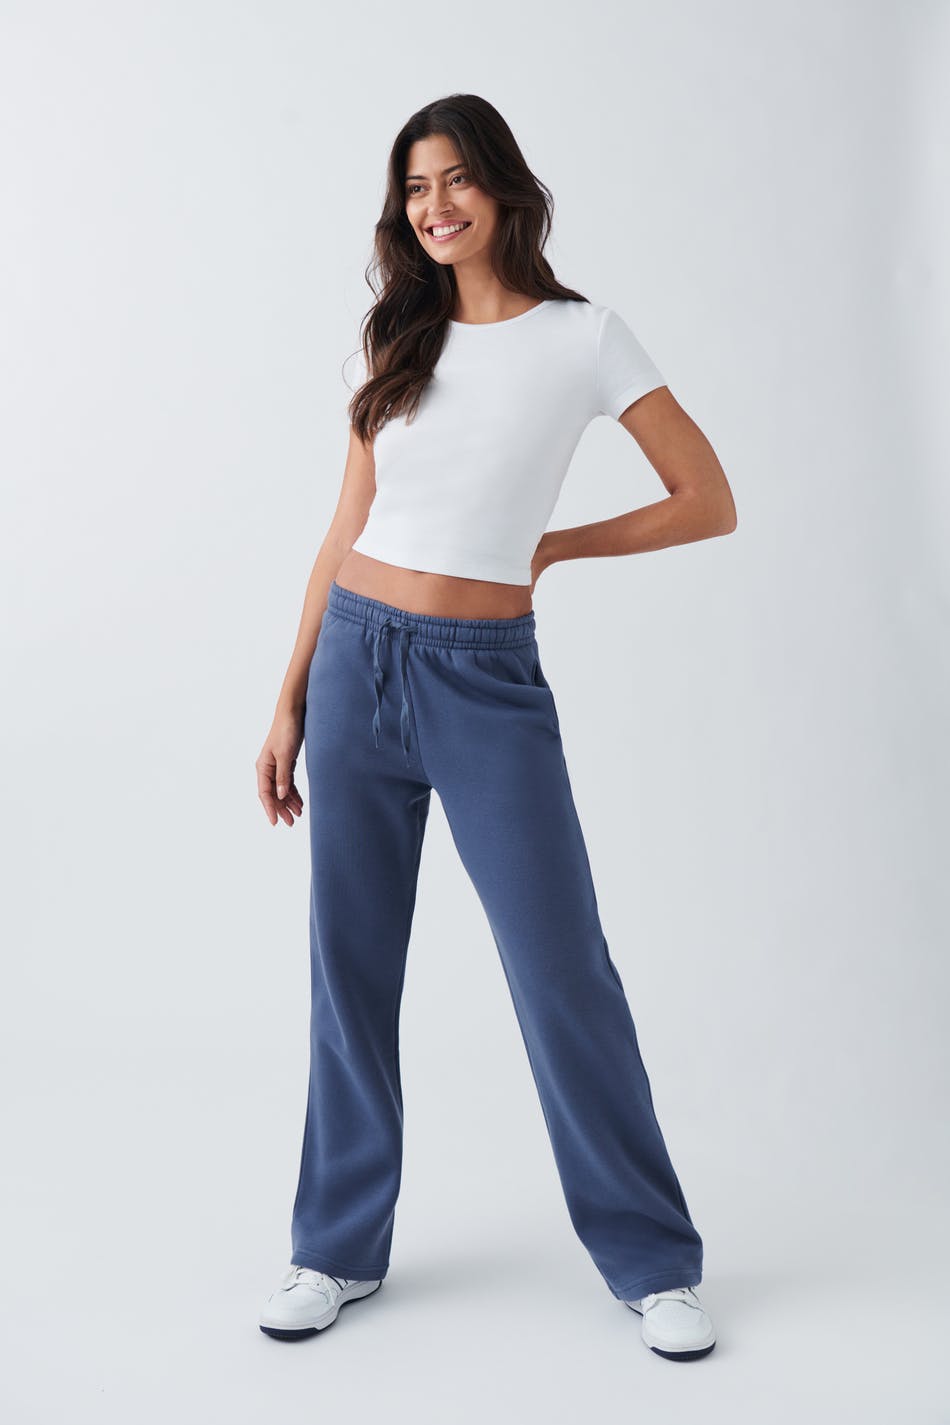 Gina Tricot - Basic straight sweatpants - sweatpants - Blue - S - Female